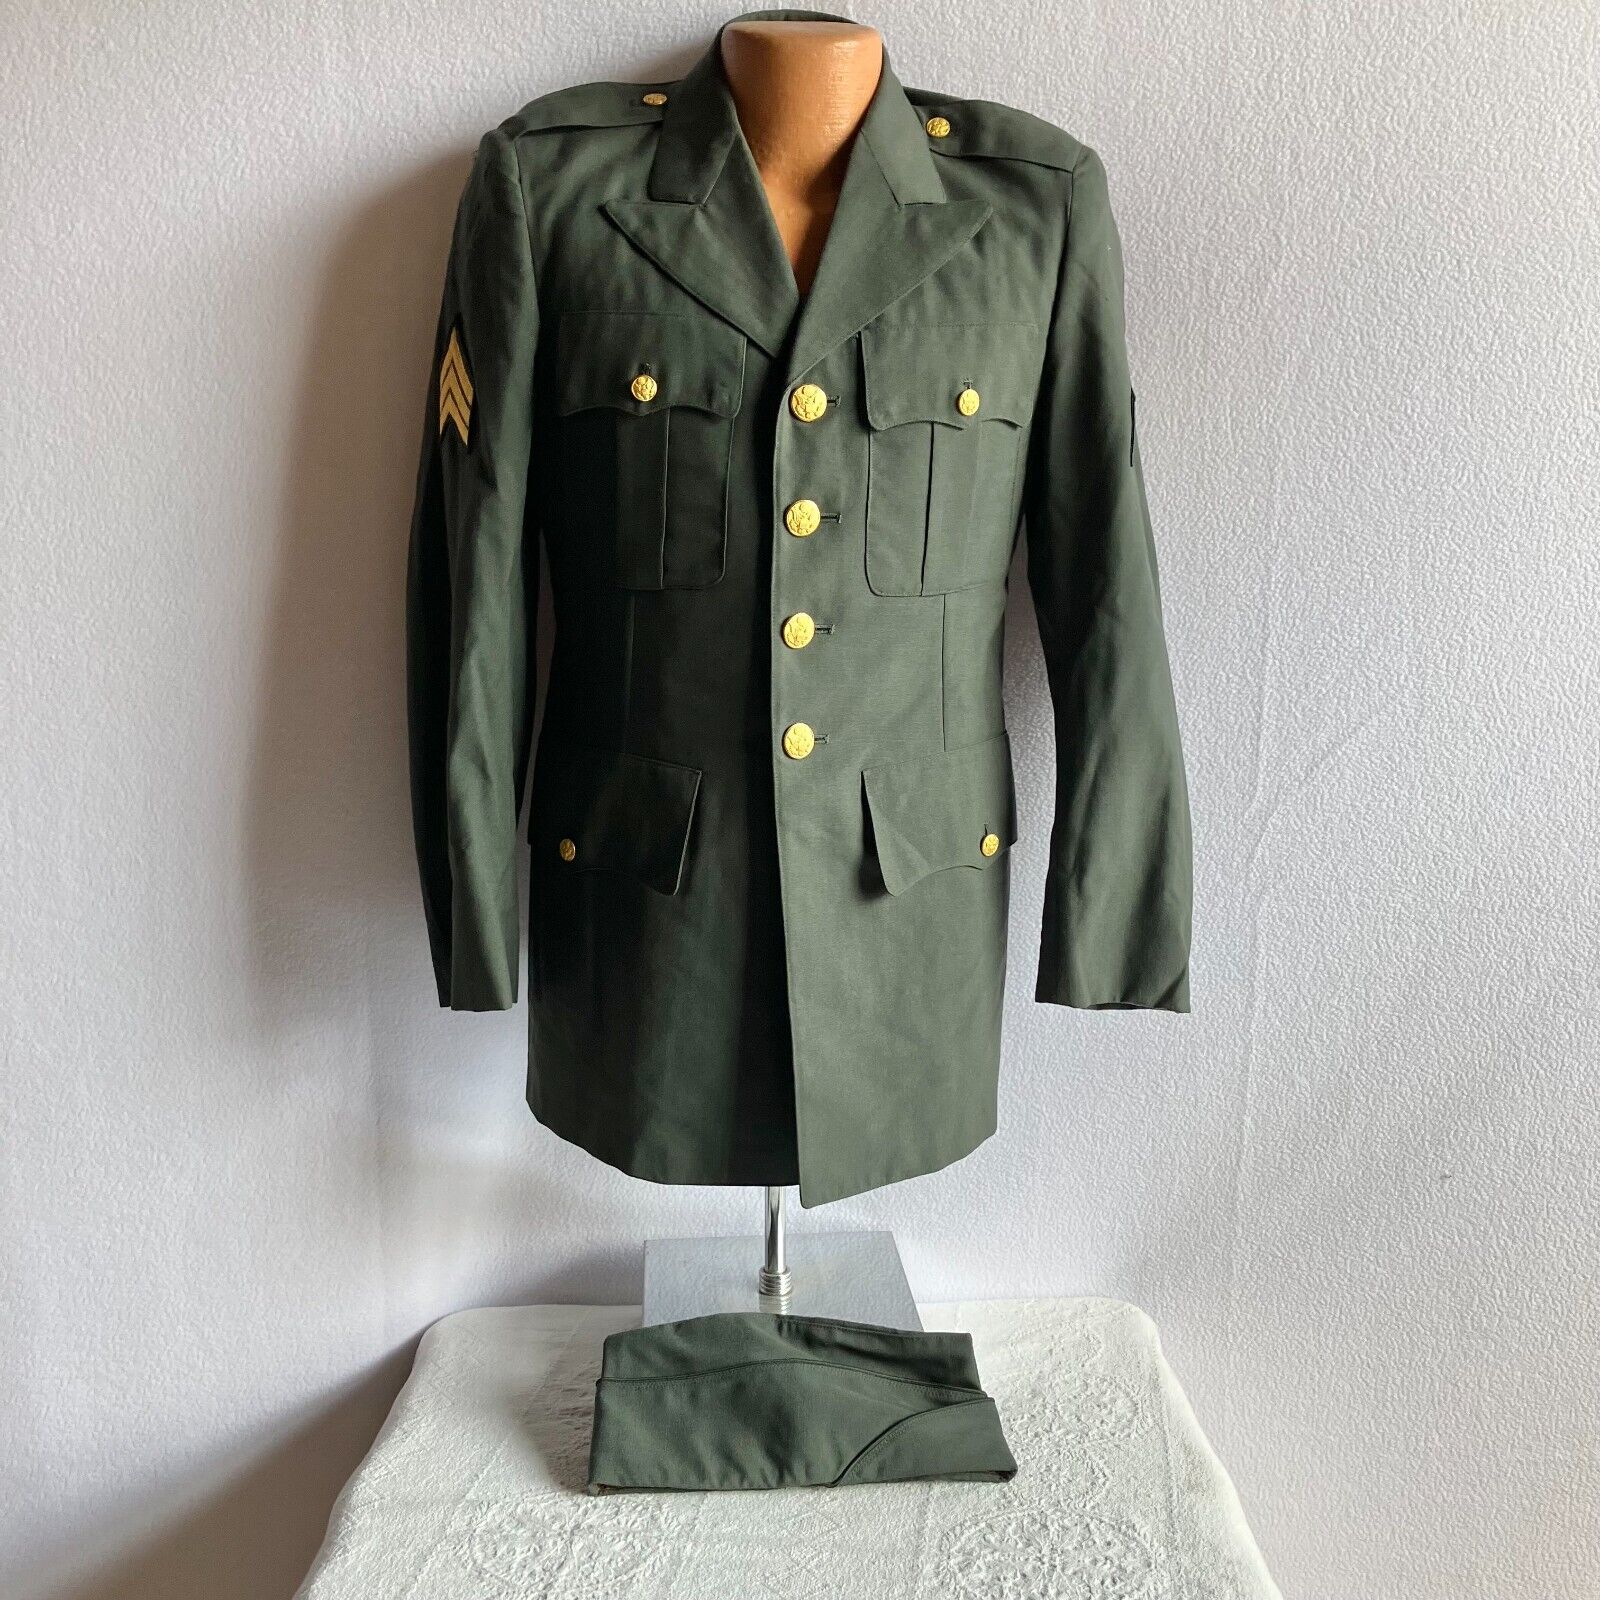 Vintage US Army Uniform Dress Jacket & Garrison Cap 35R Vietnam Era?